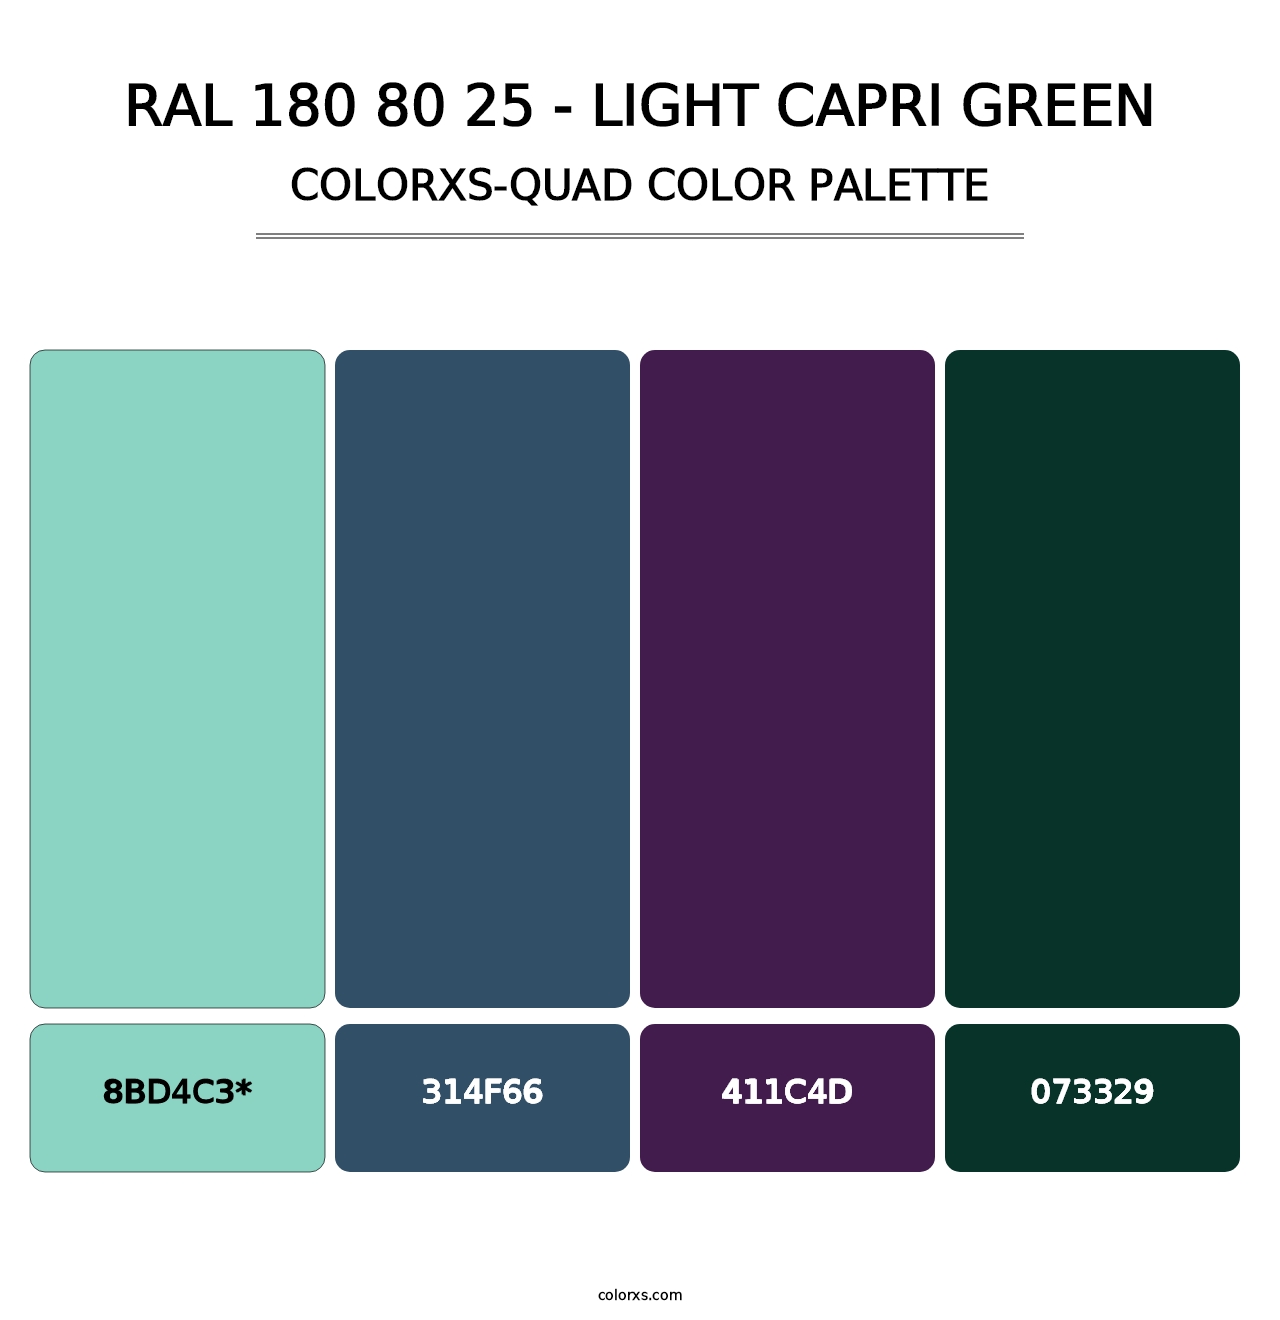 RAL 180 80 25 - Light Capri Green - Colorxs Quad Palette